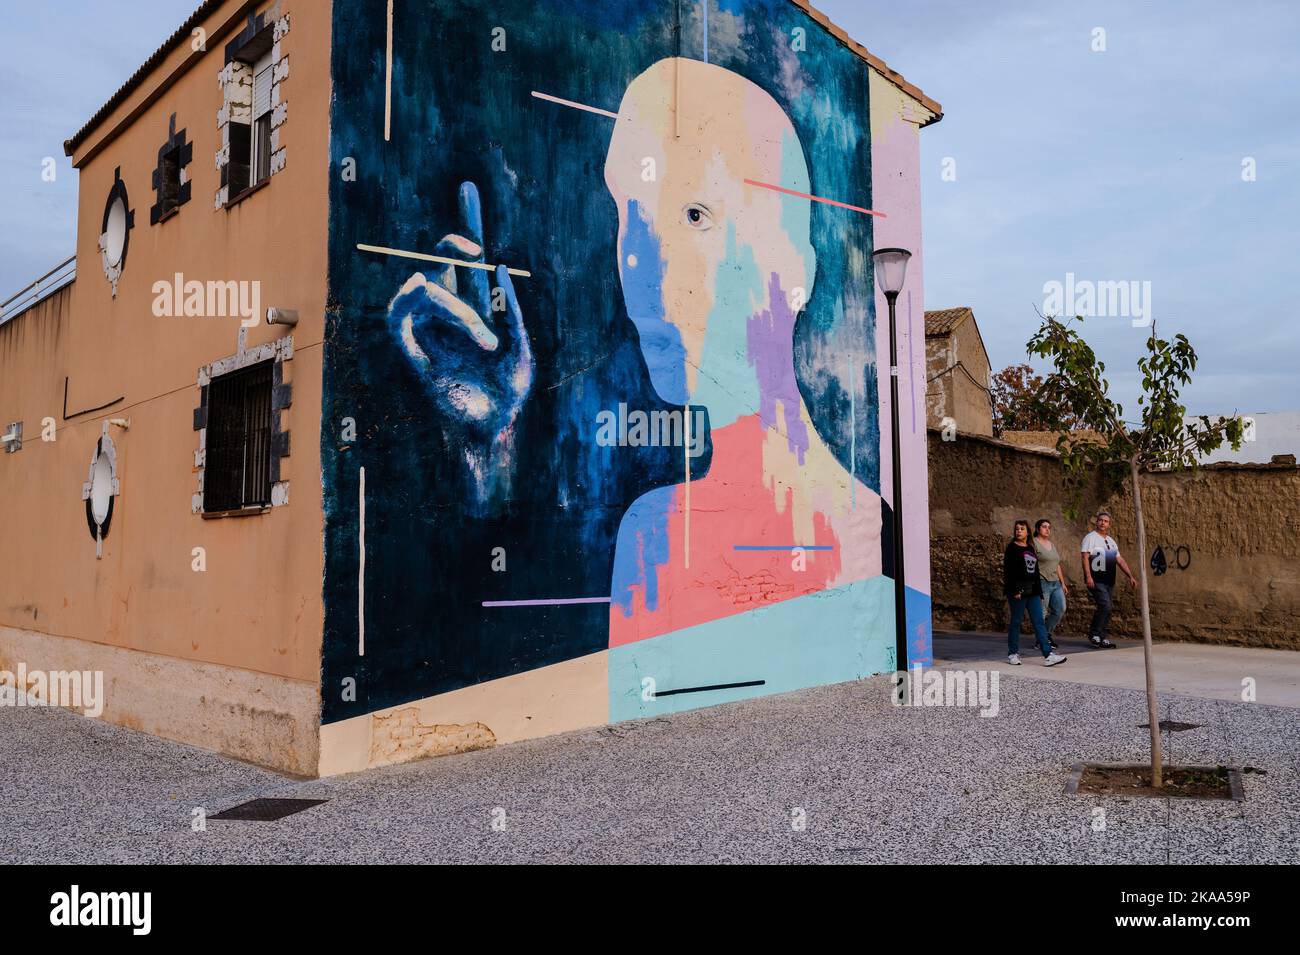 Txemy artwork during Asalto International Urban Art Festival in Barrio Isabel of Zaragoza, Spain Stock Photo